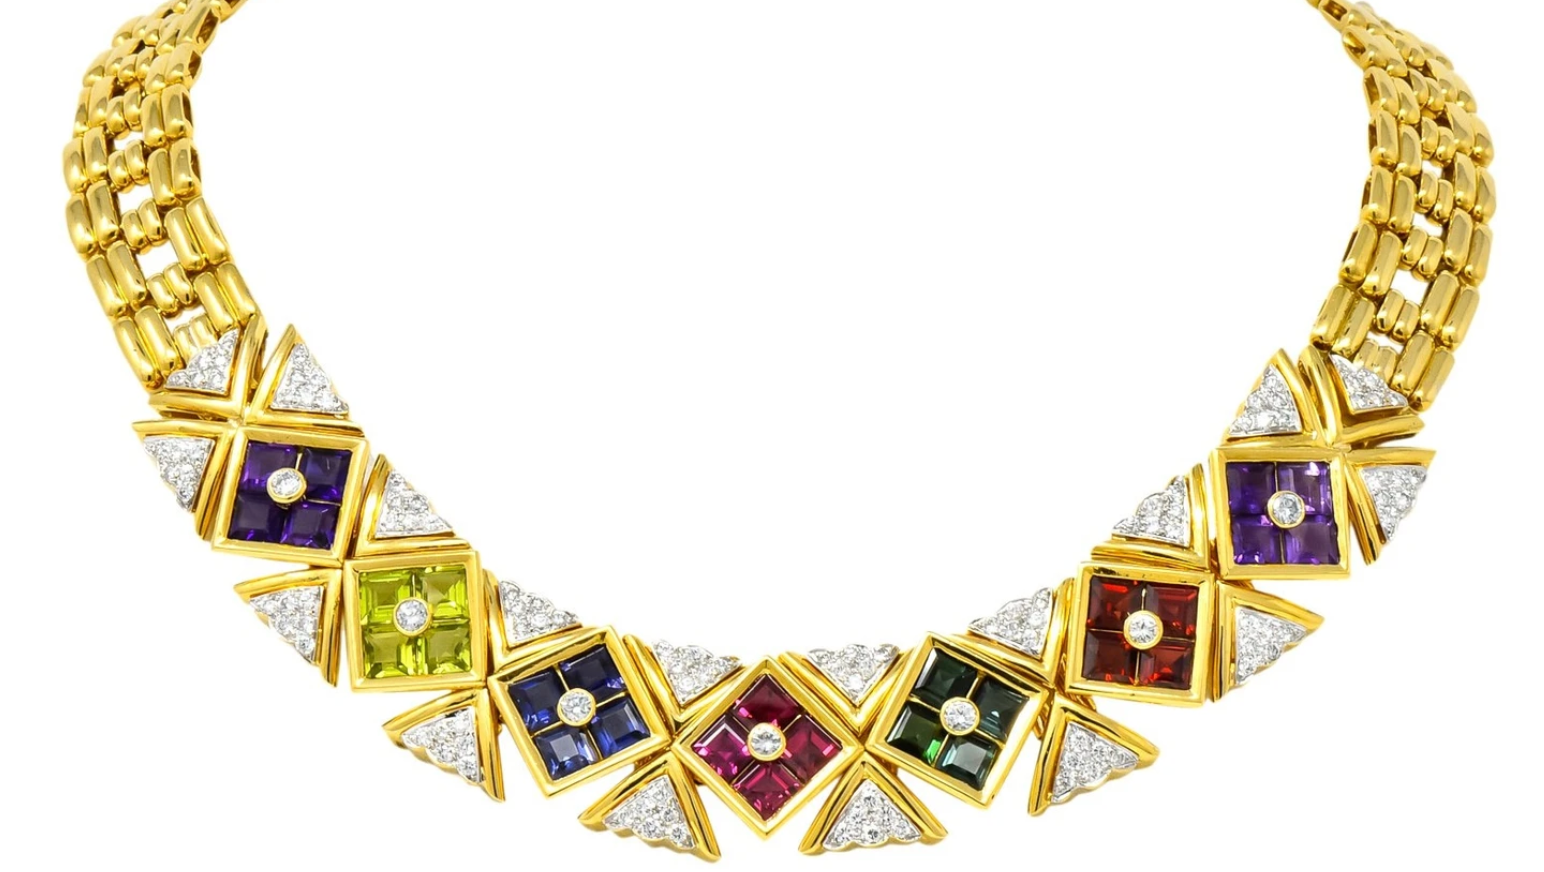 Tiffany & Co. Paloma Picasso Collier en or 18 carats avec pierres précieuses Arlequin